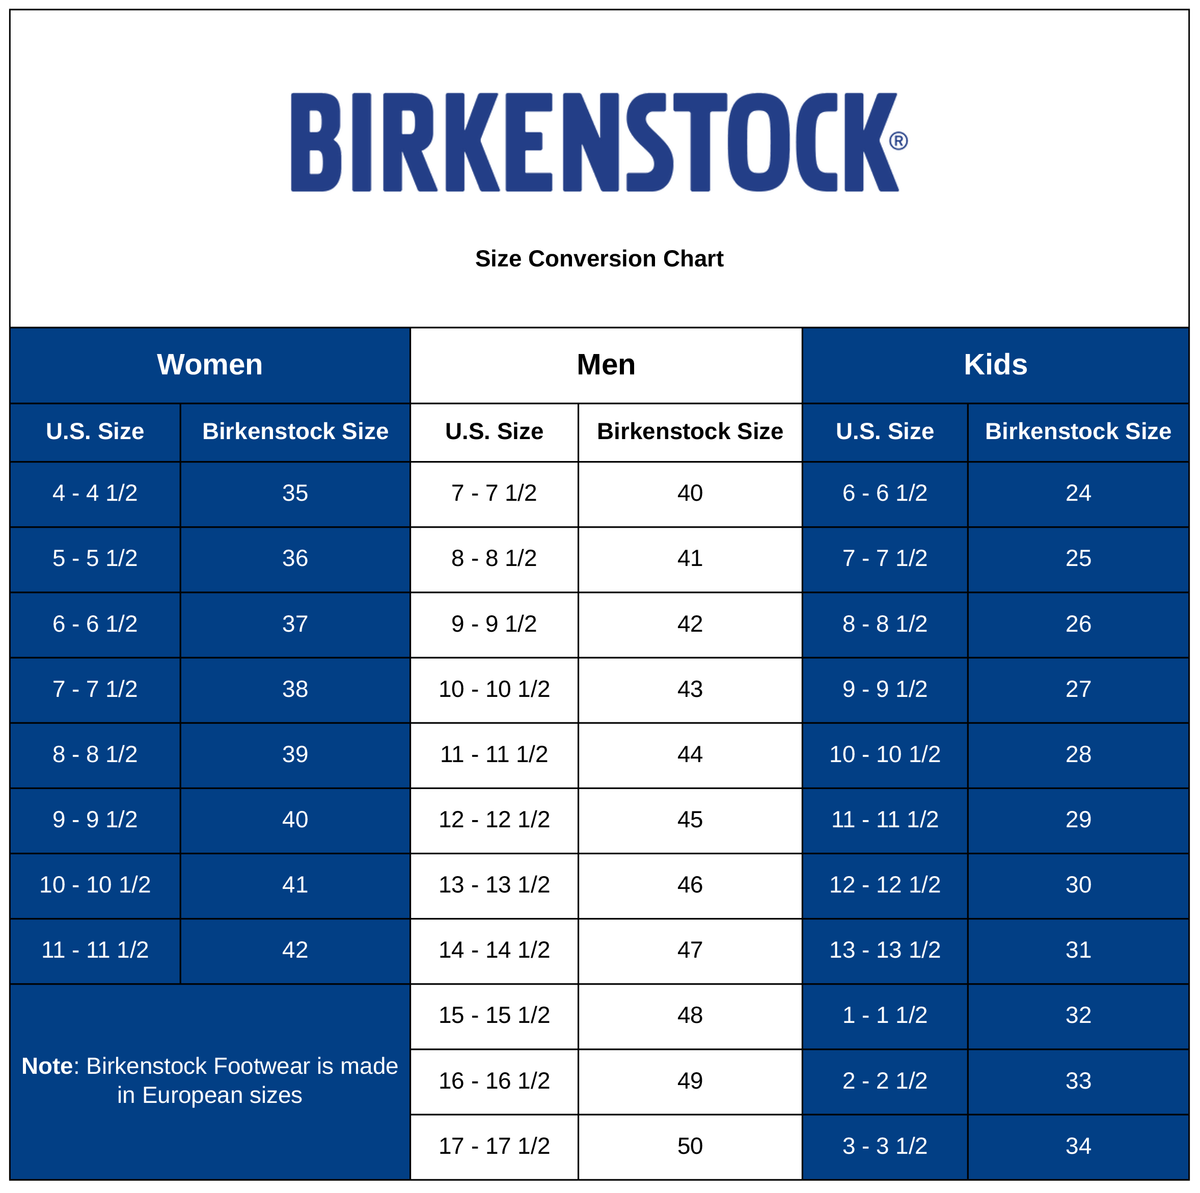 Birkenstock Gizeh Big Buckle Textile Sandals - Khaki (Regular/Wide)